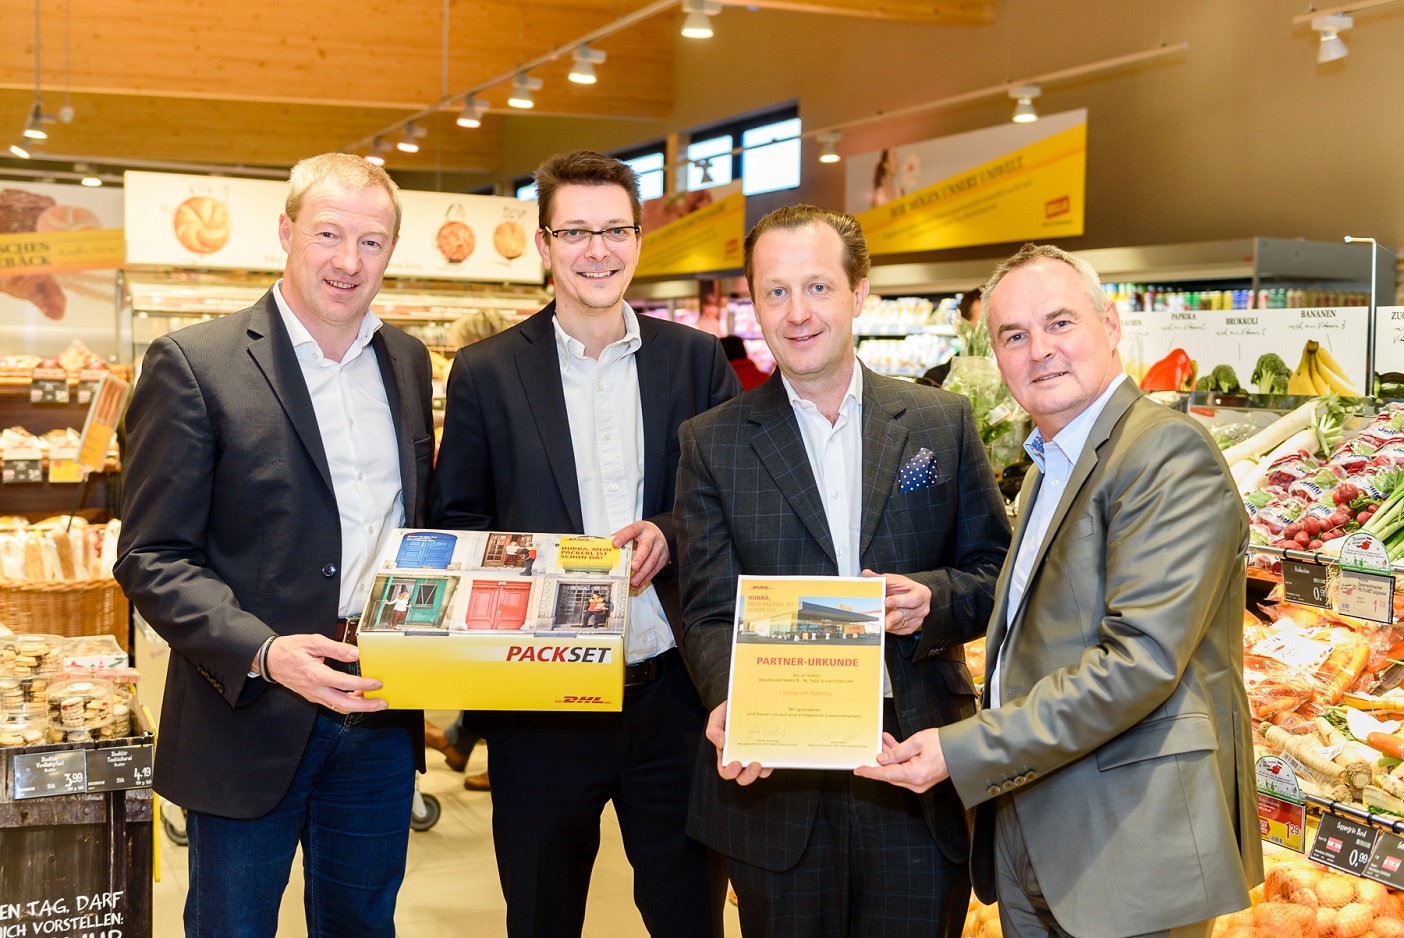 DHL Paket Austria: 700 new parcel shops with Billa supermarkets